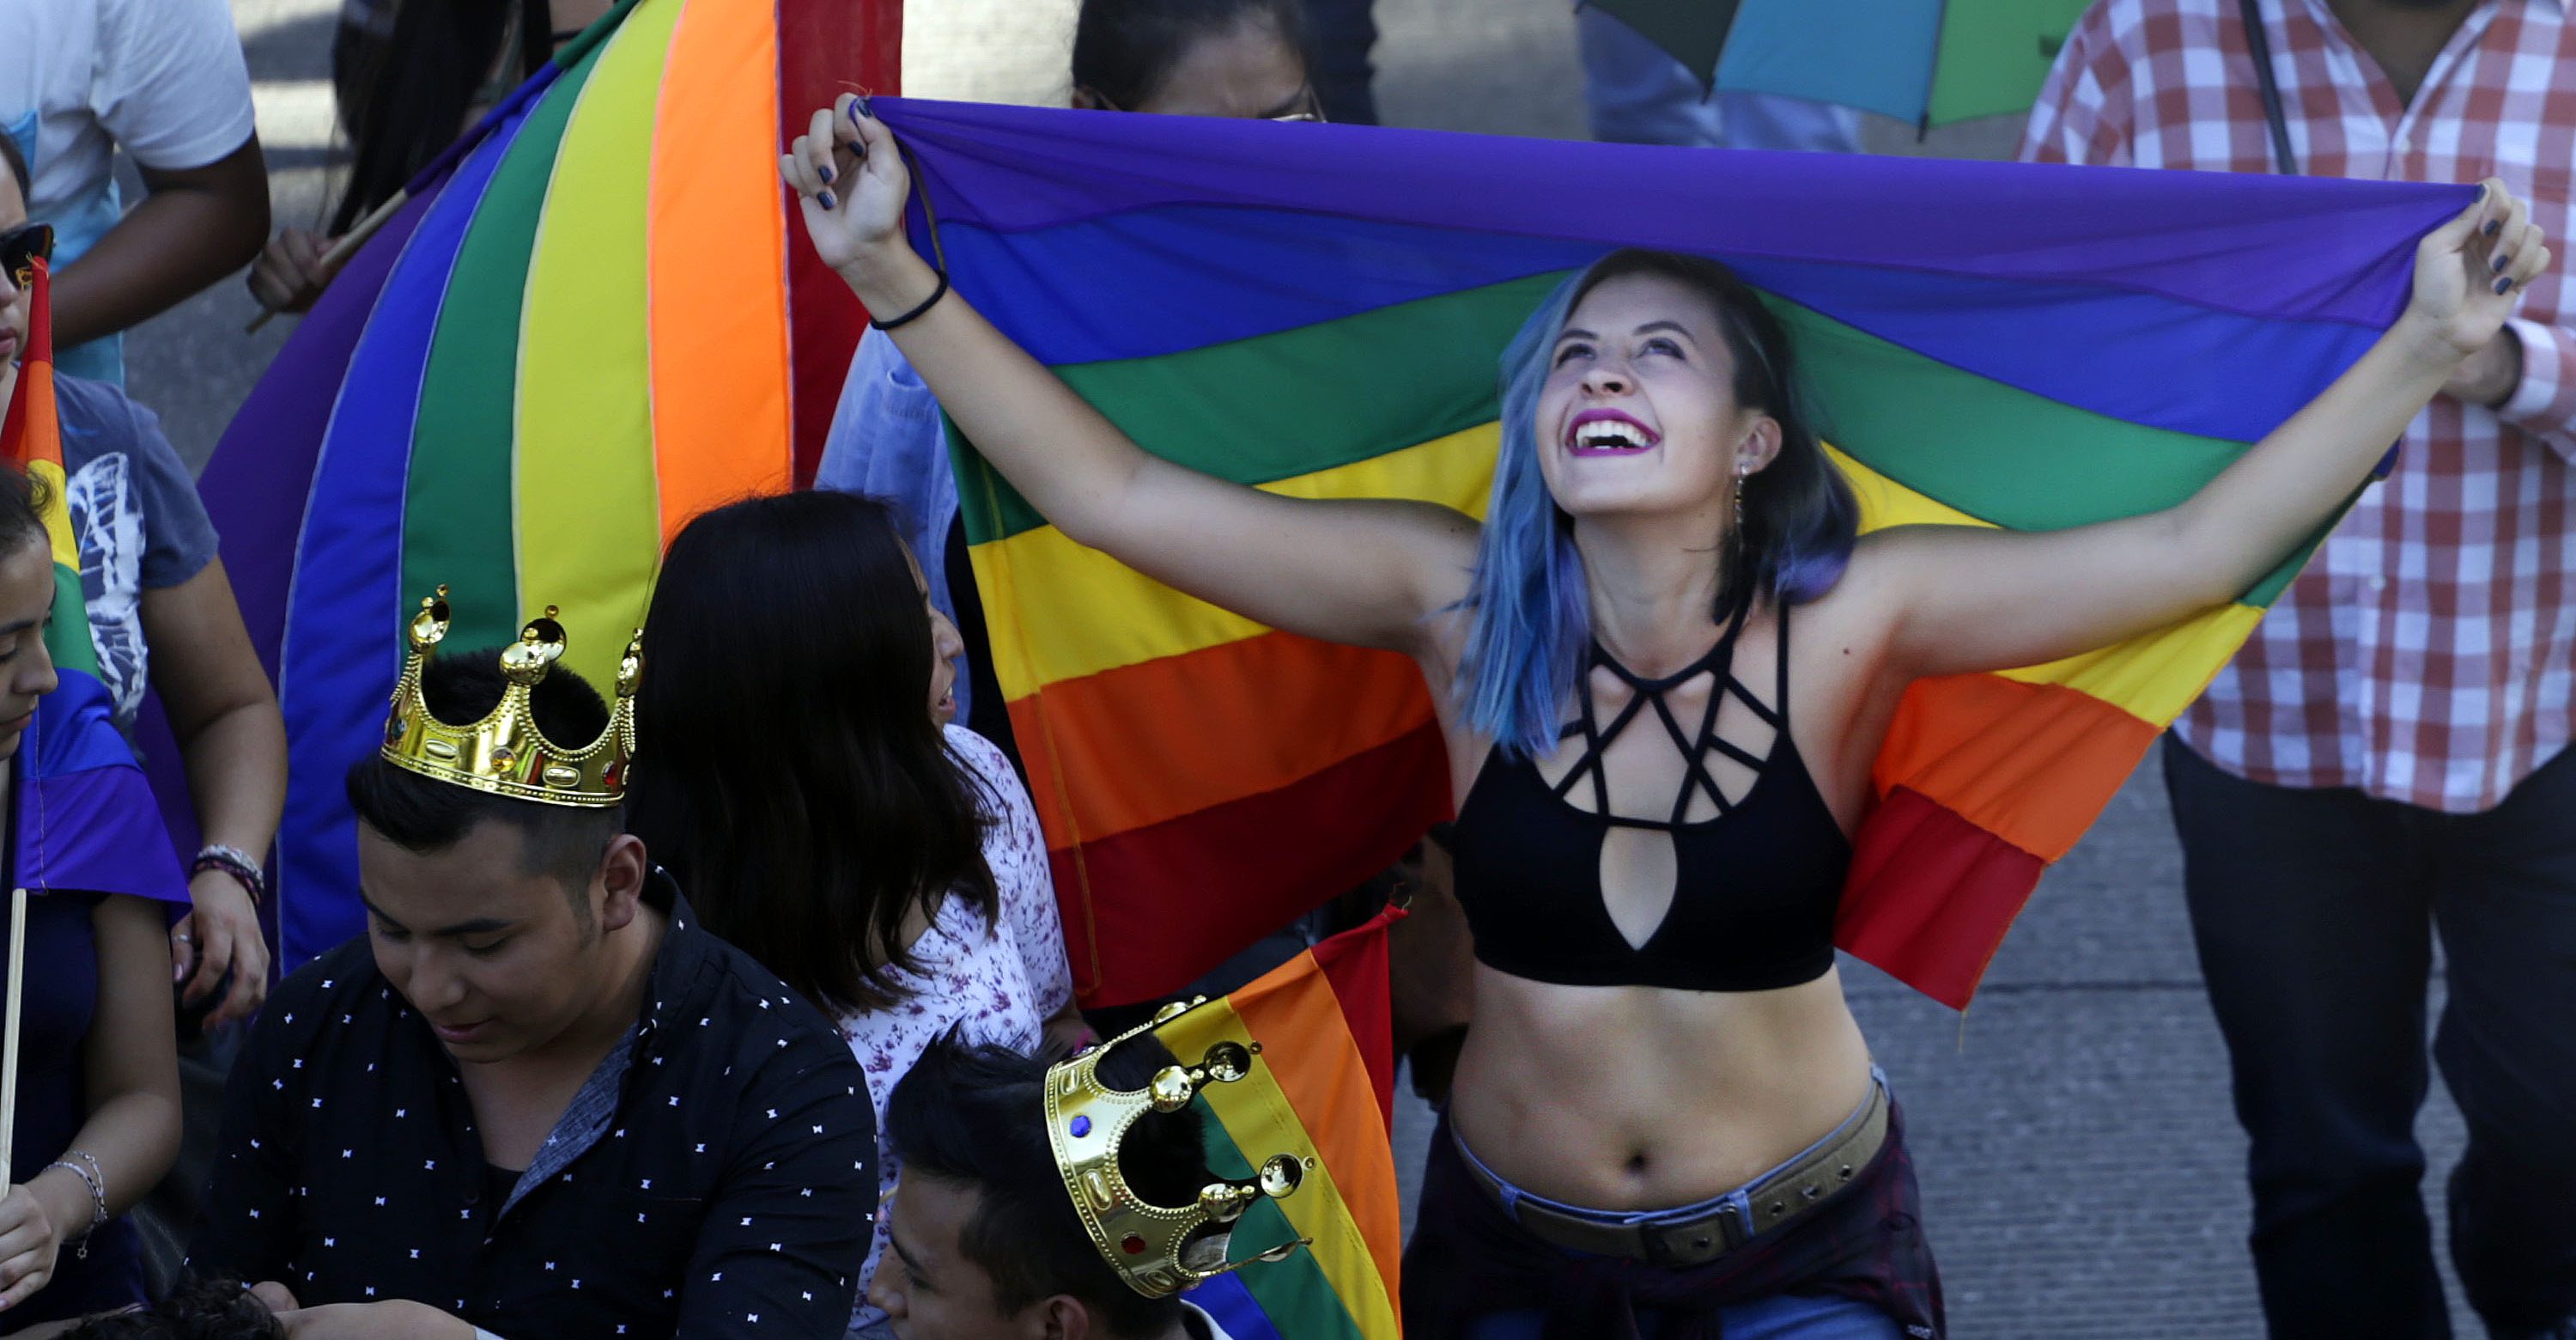 La Salle cancels event on "false rights" LGBT